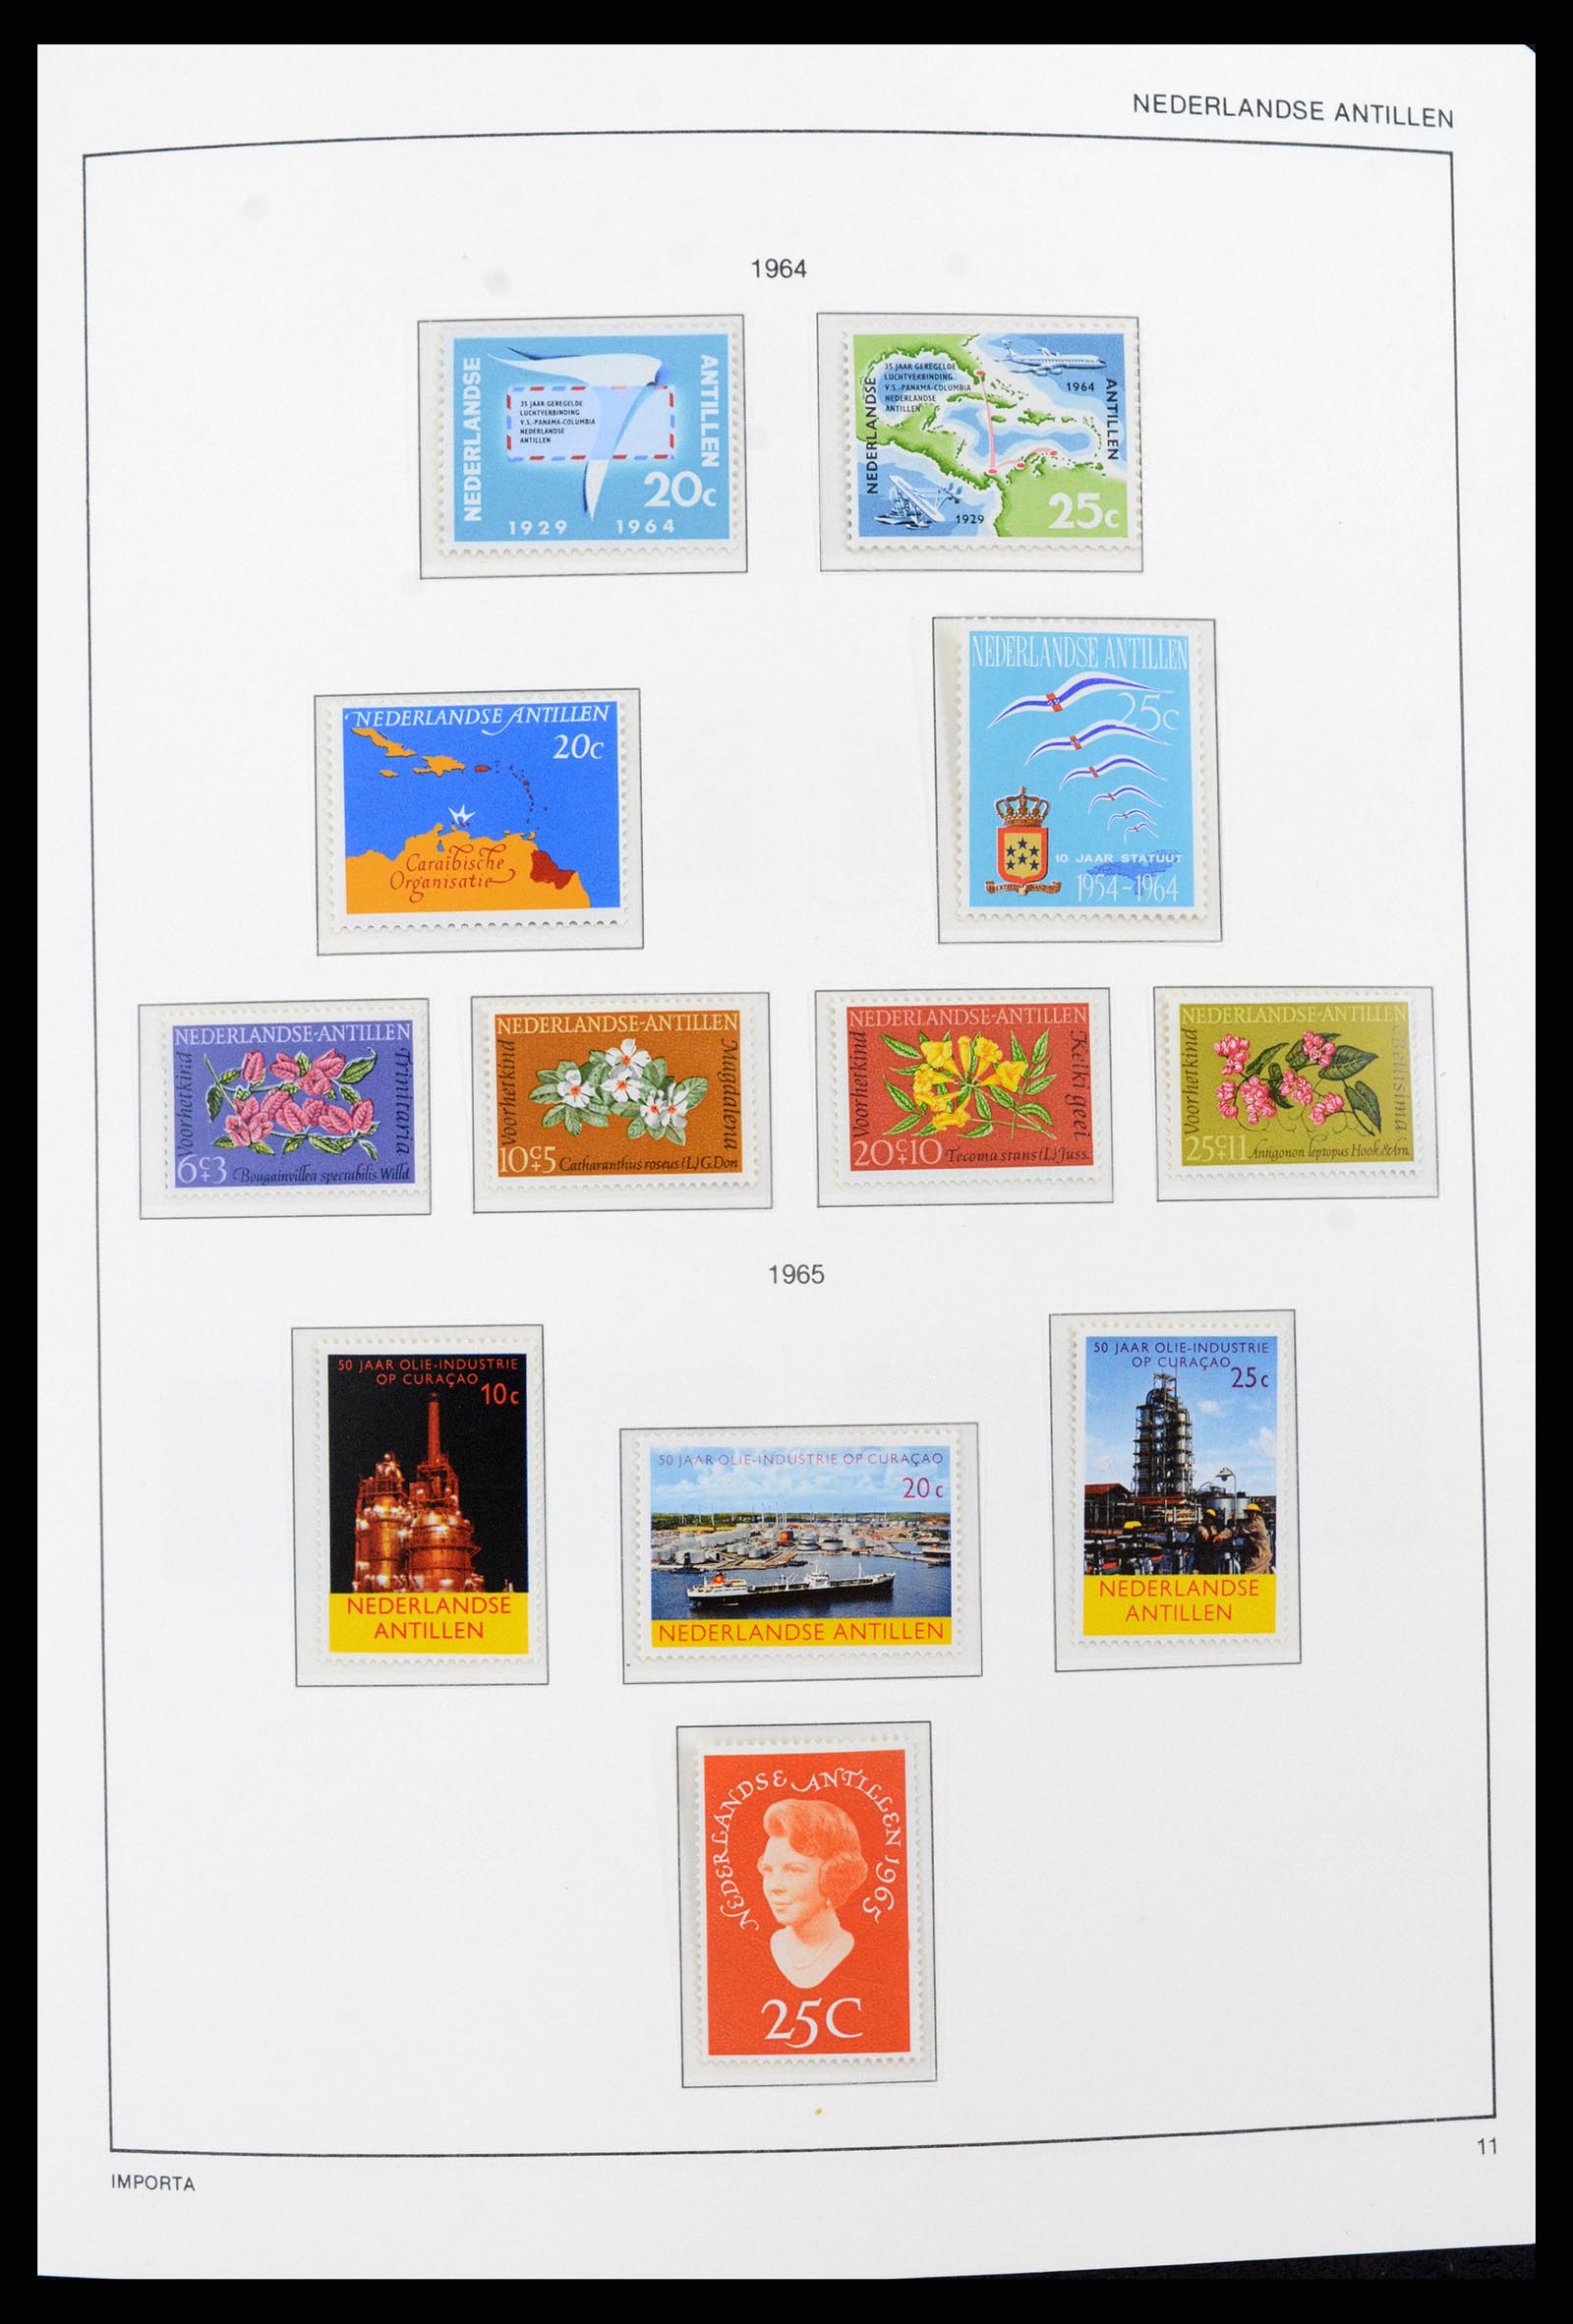 37693 011 - Stamp collection 37693 Netherlands Antilles 1949-2001.